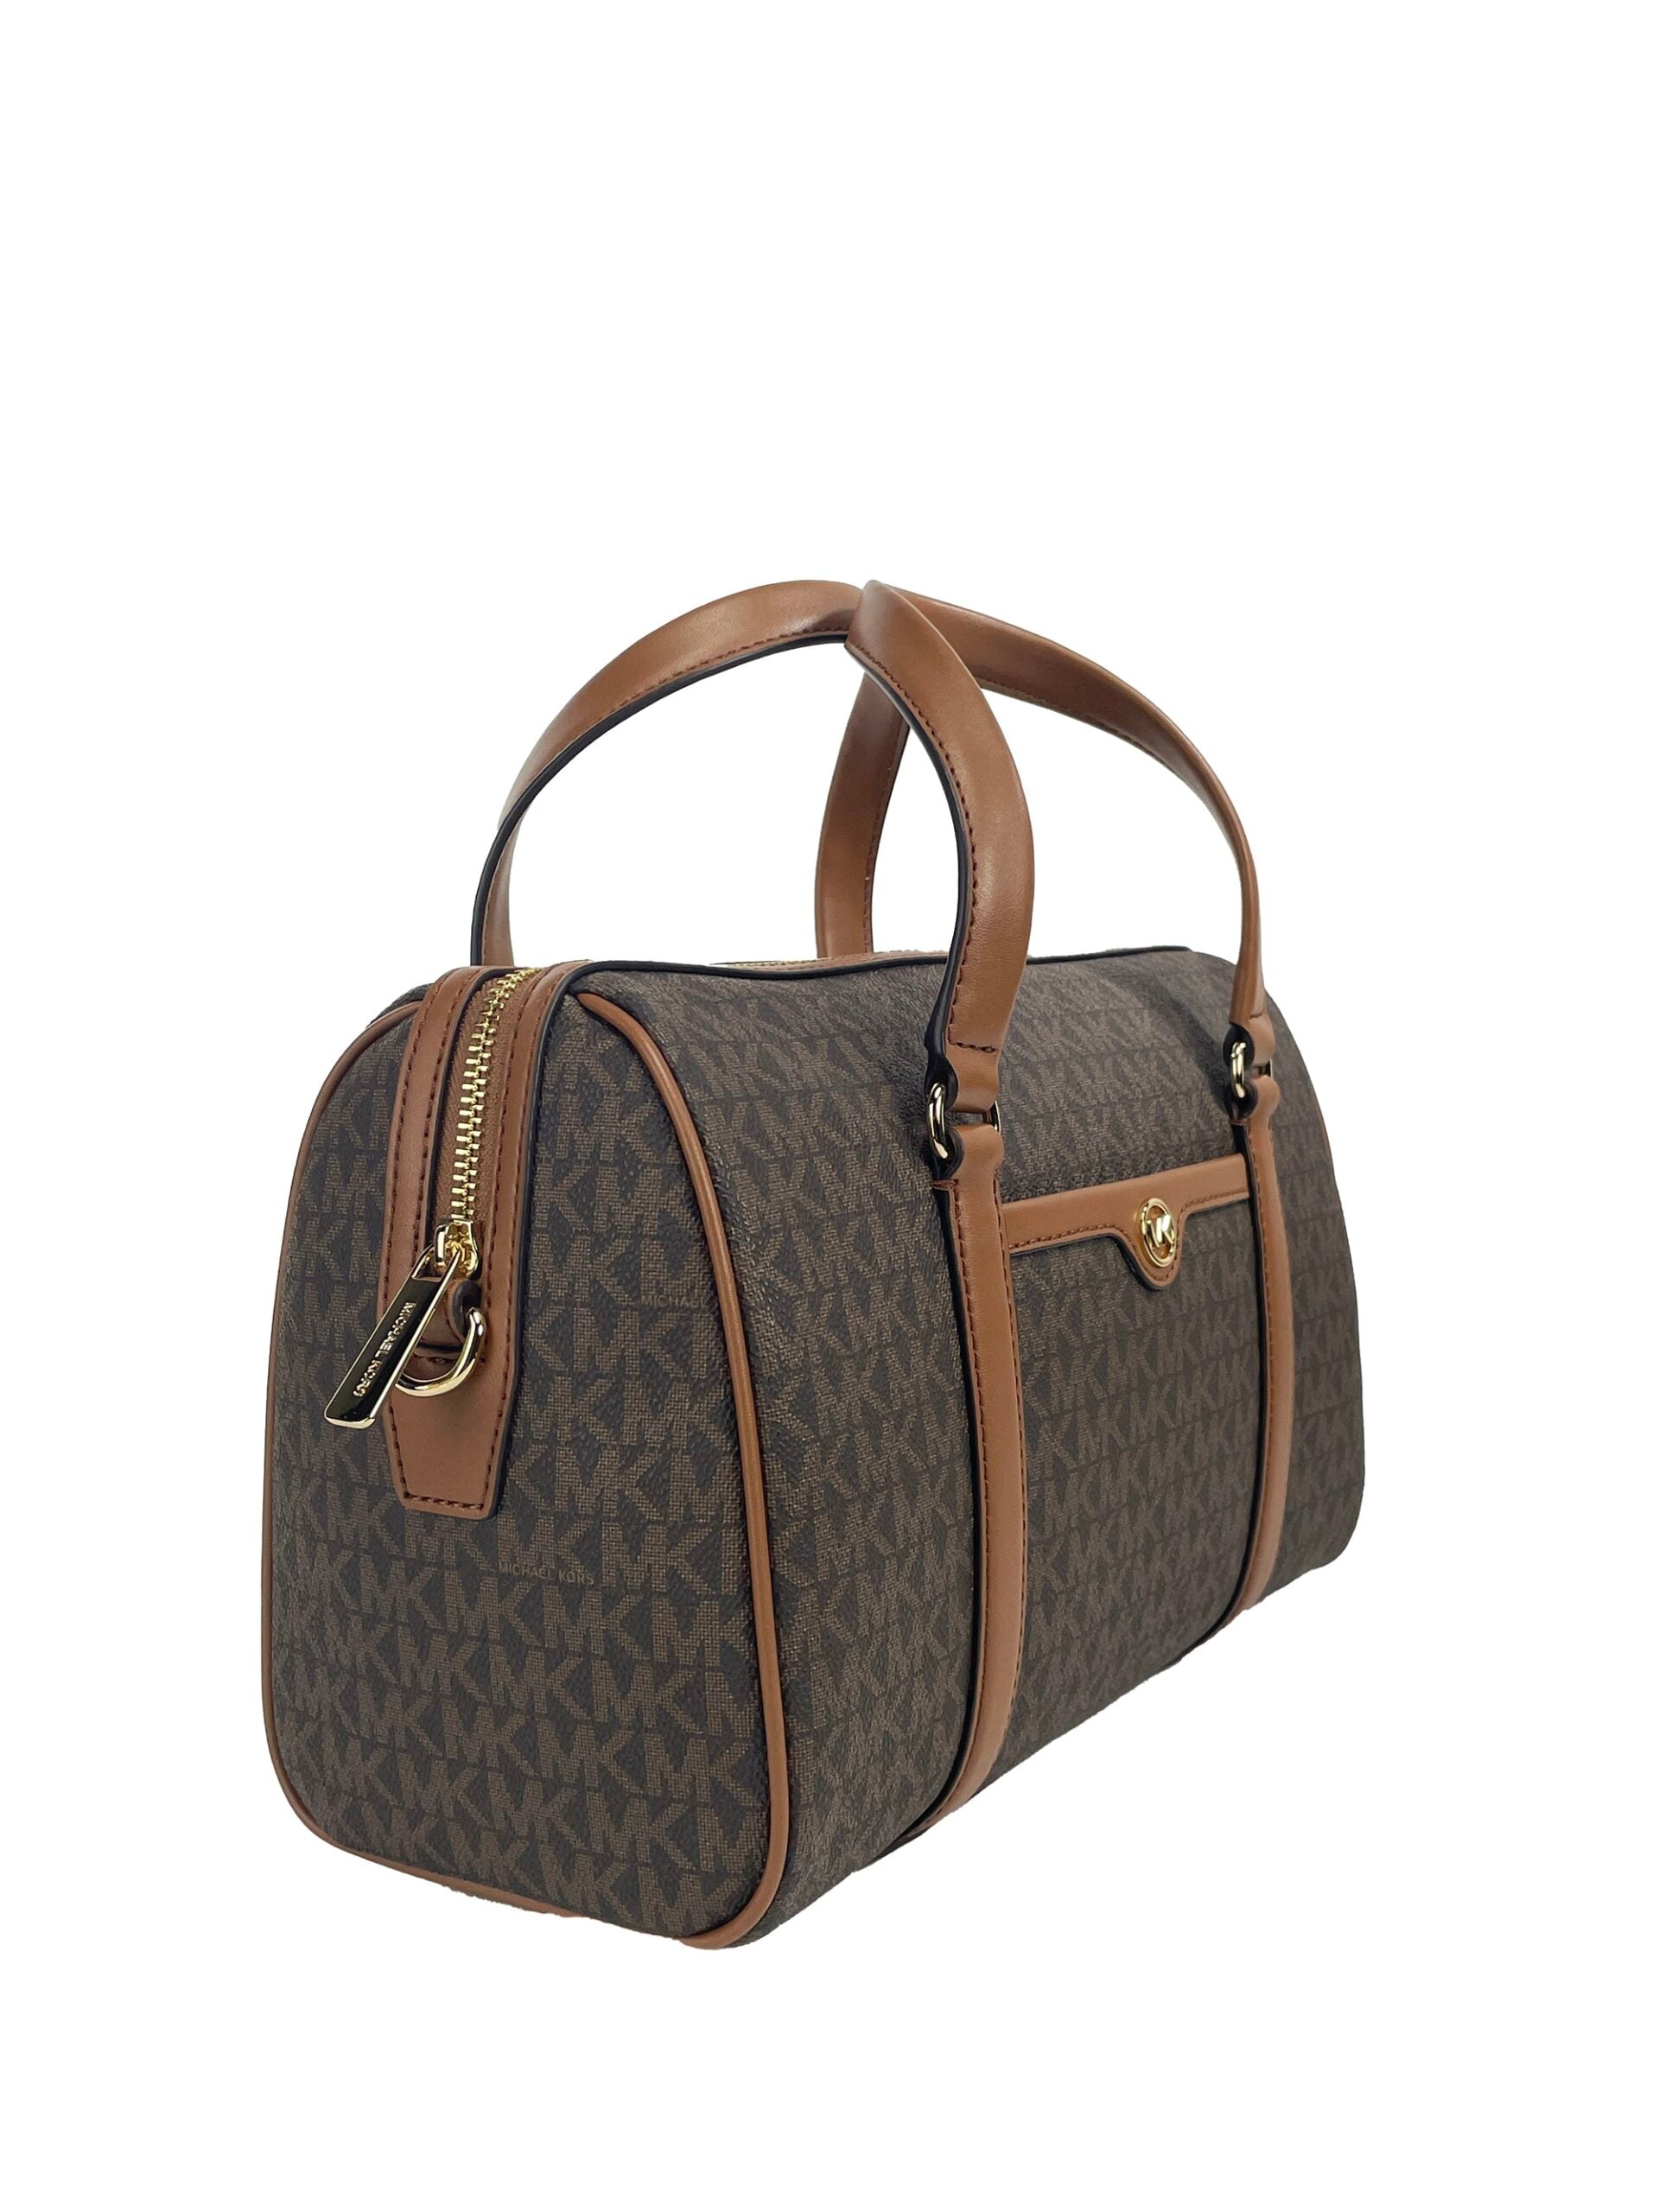 Fashionsarah.com Fashionsarah.com Michael Kors Travel Medium Duffle Satchel Crossbody Bag Purse Brown